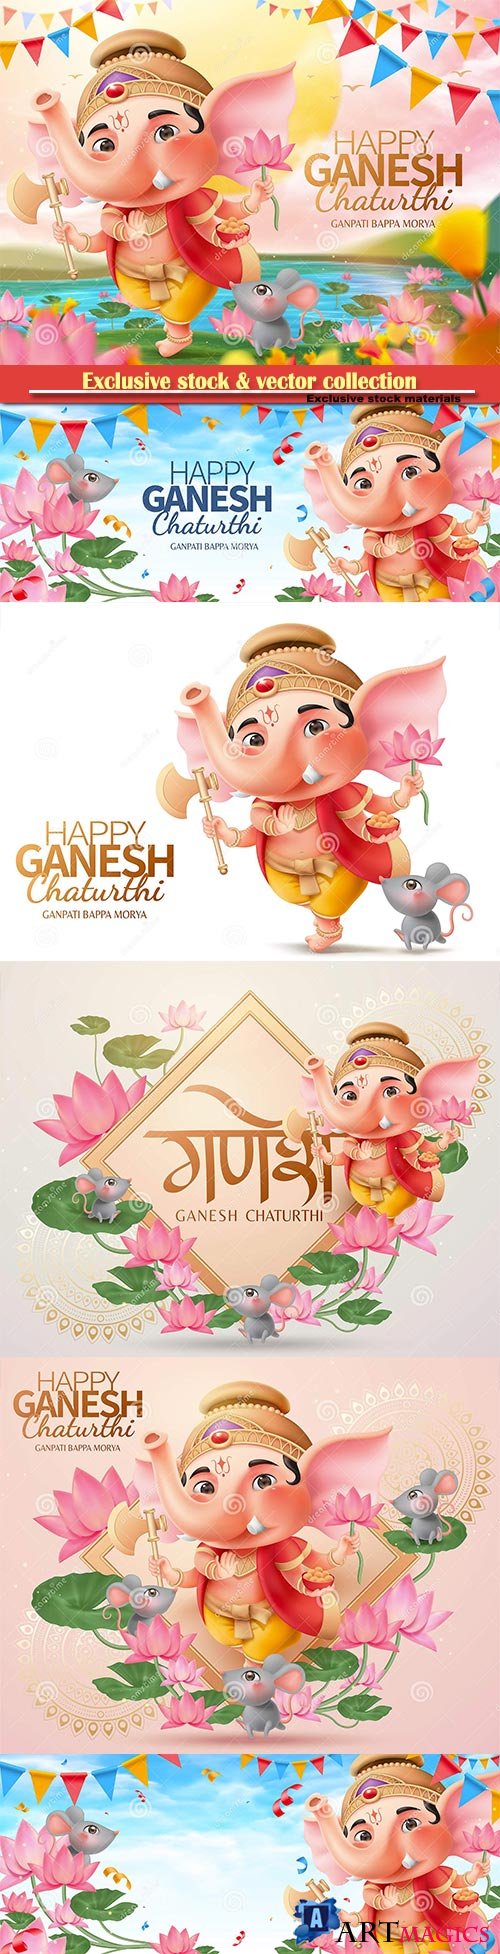 Happy Ganesh chaturthi vector design